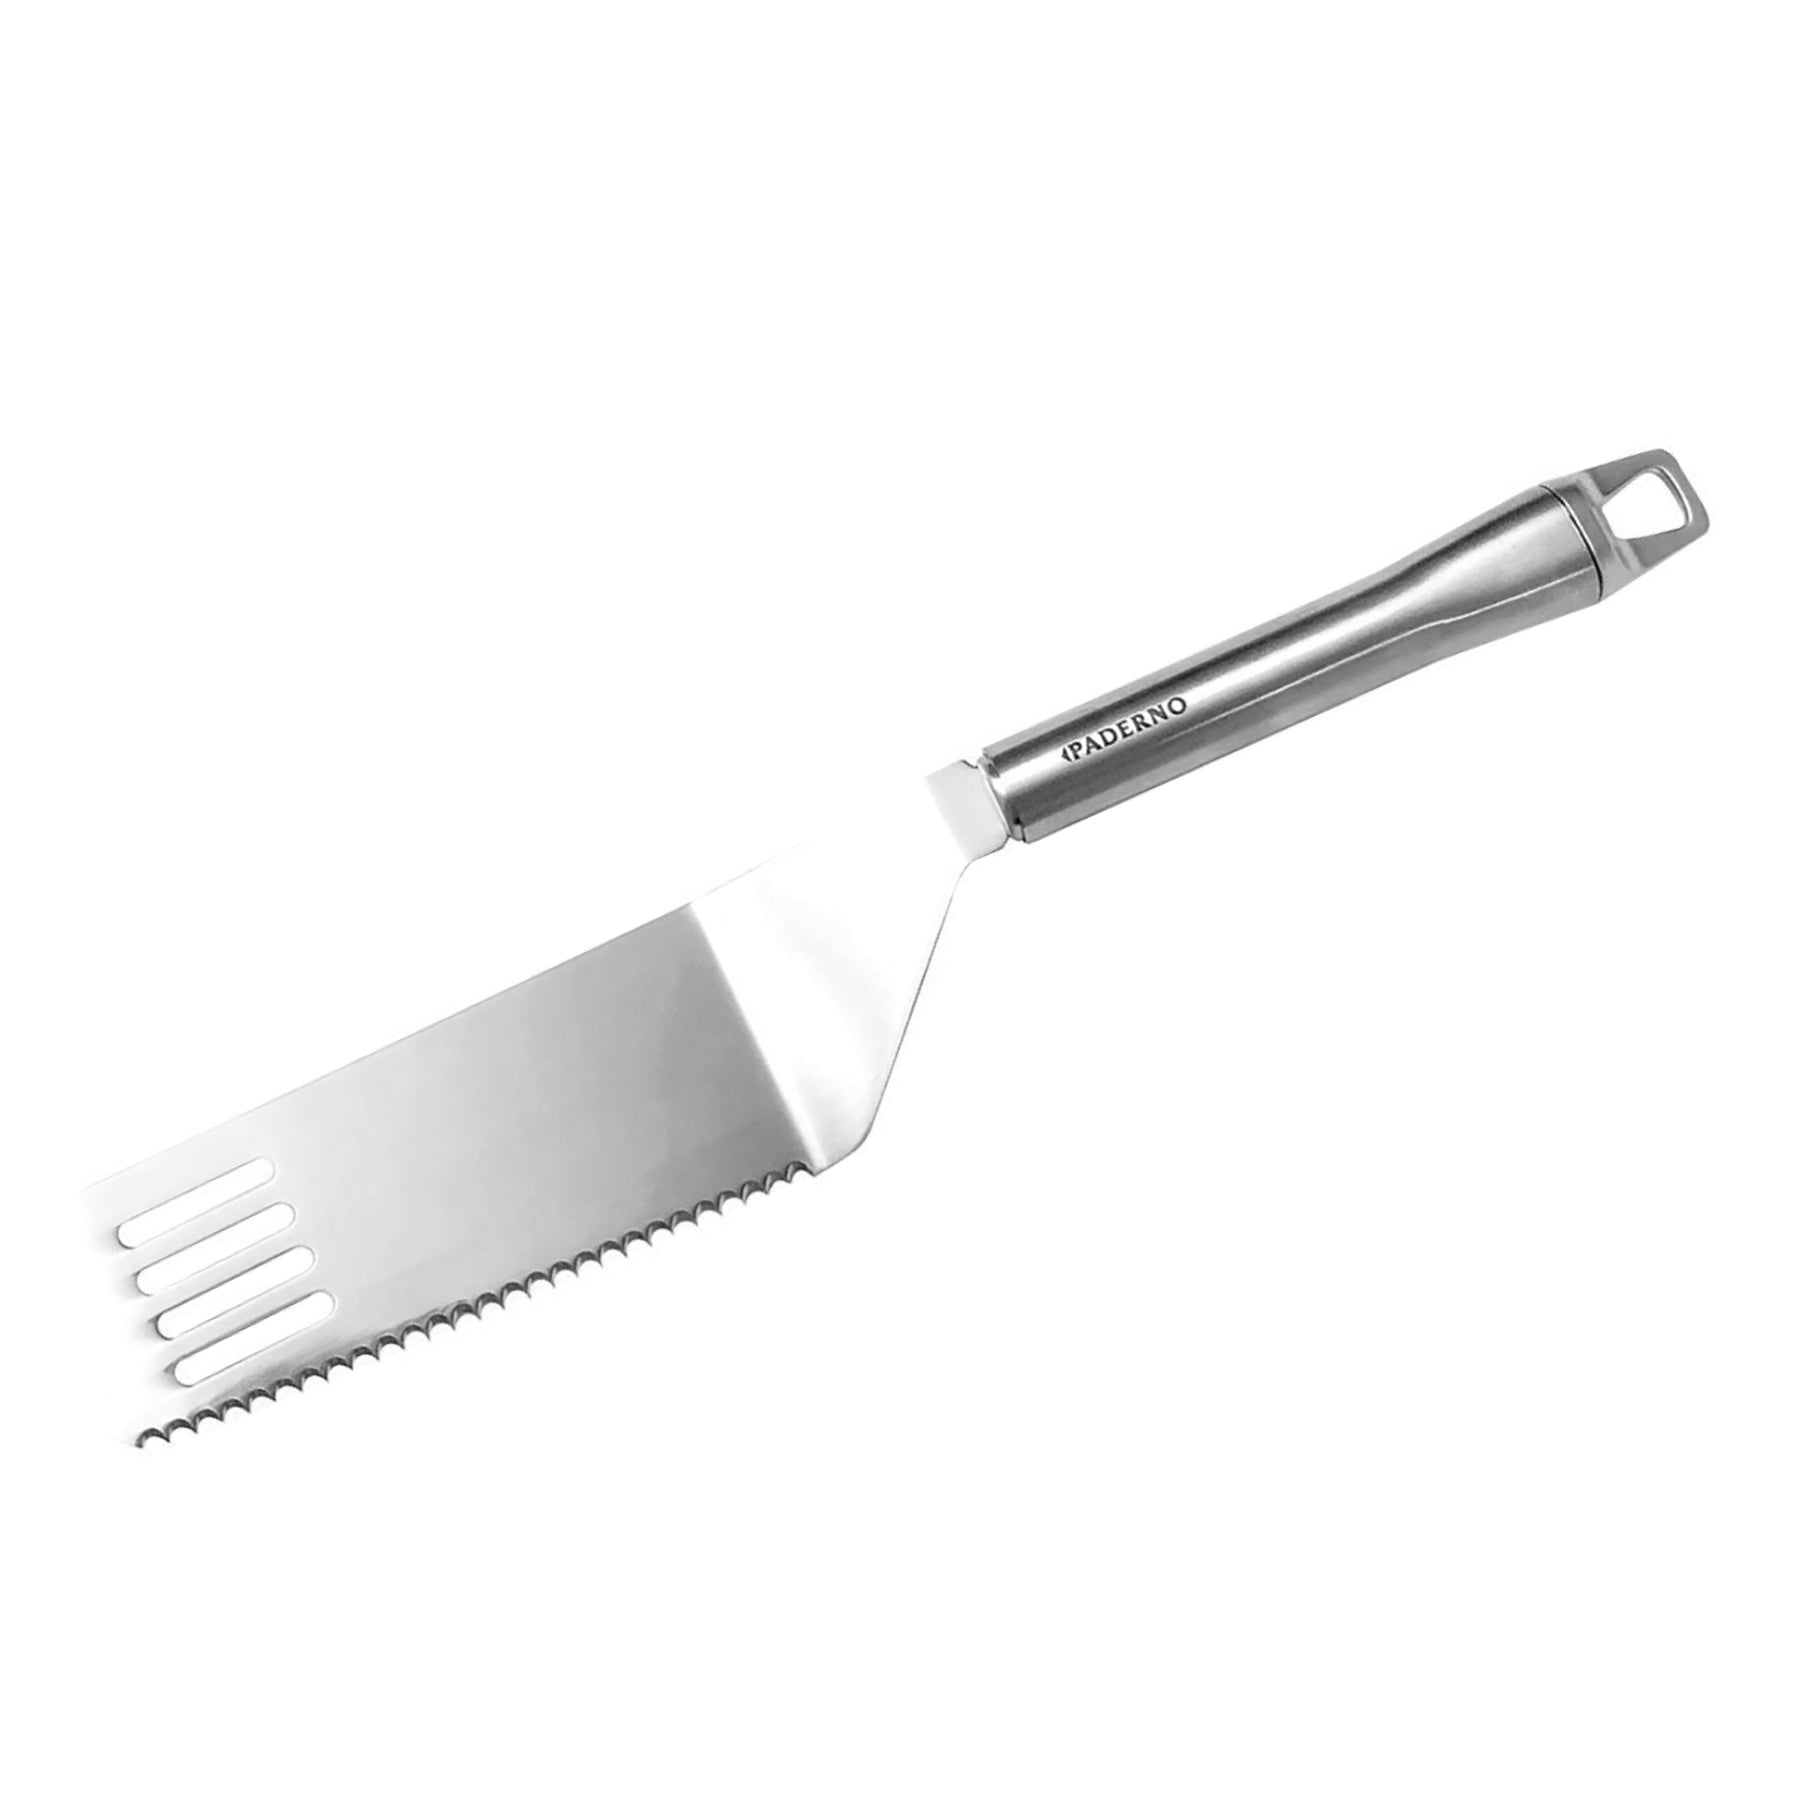 Mini Spatula with Spoon - LaVaque Professional